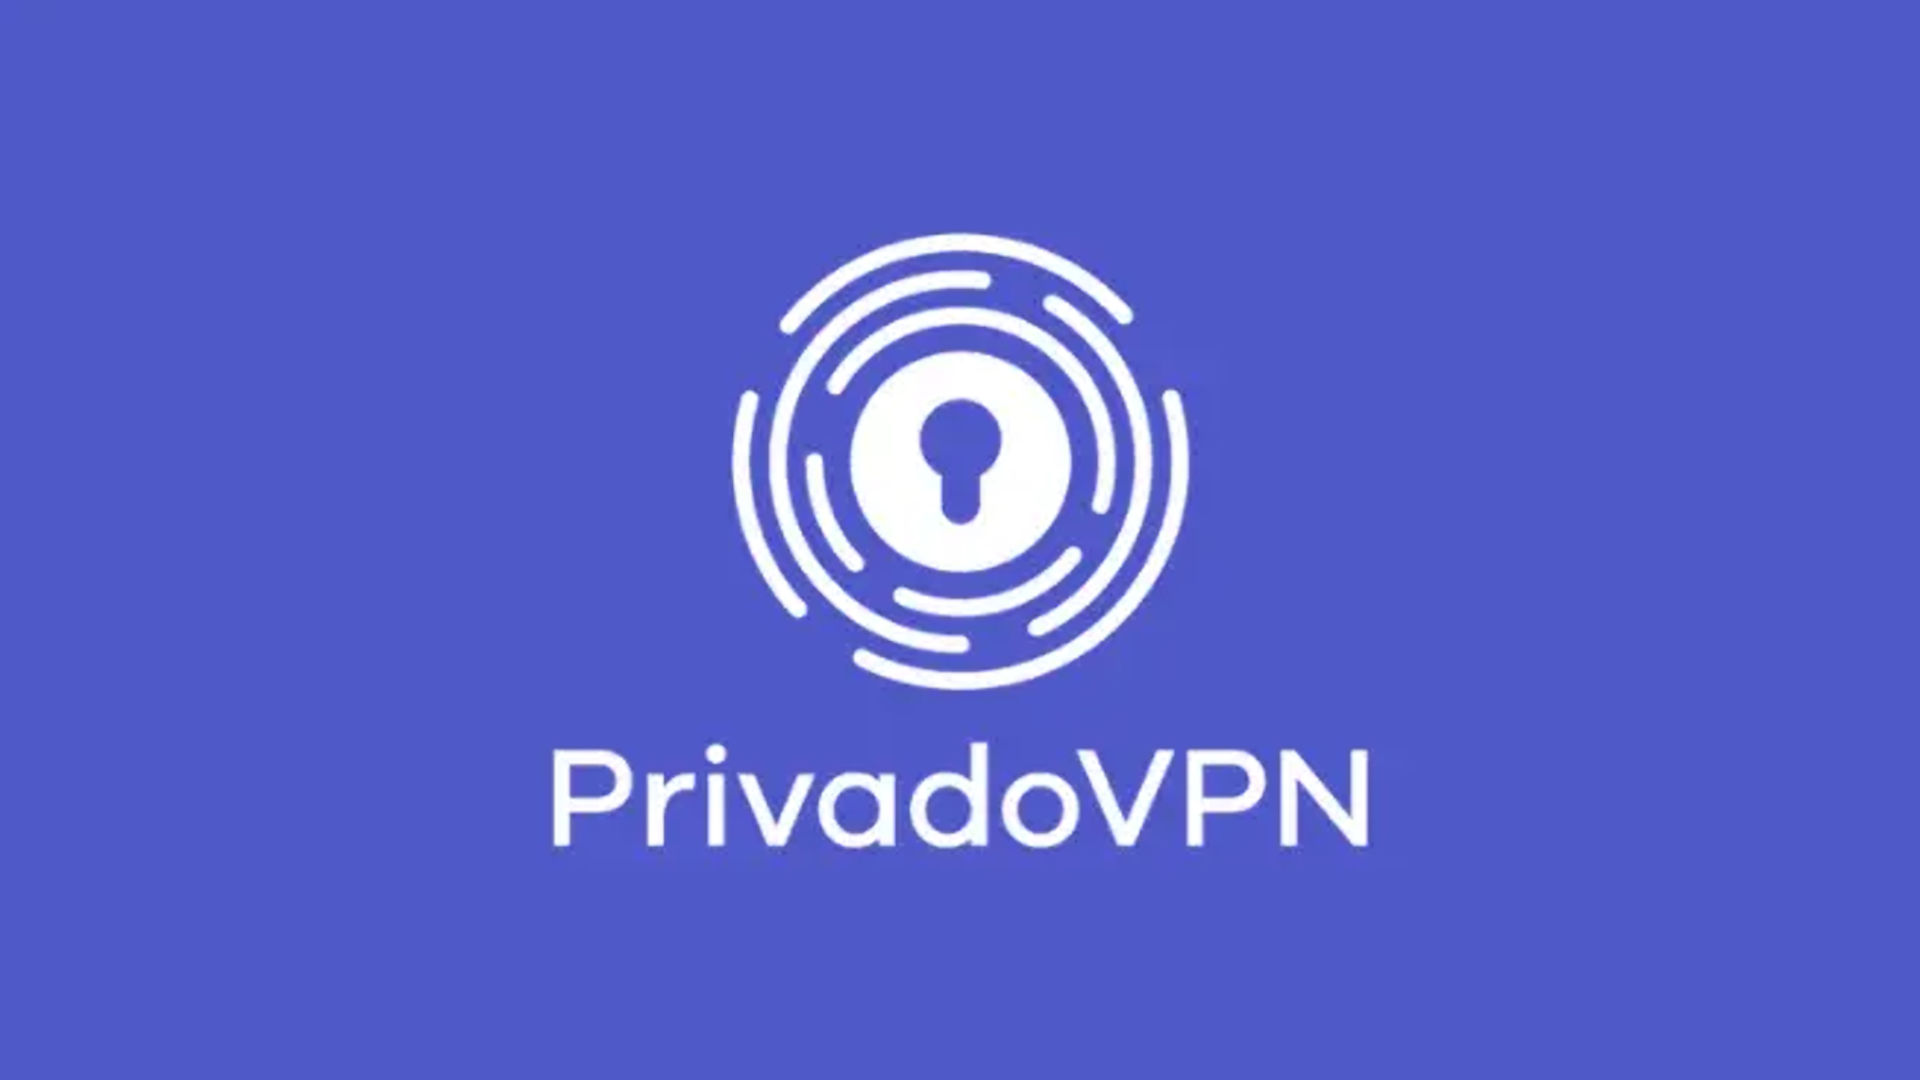 Privado VPN logo